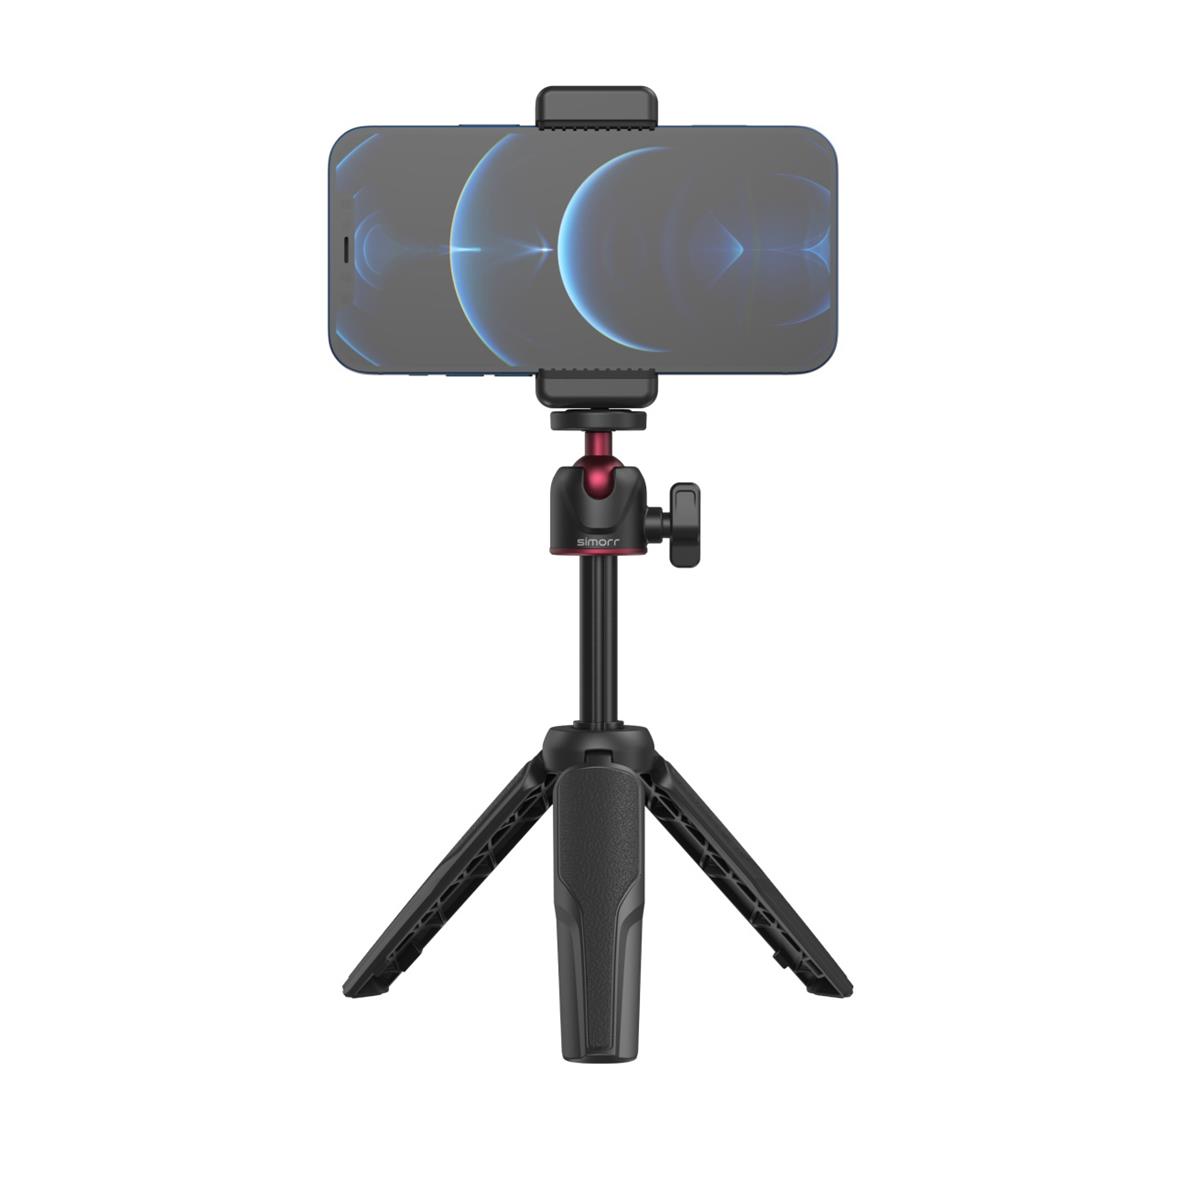 Комплект штатива SmallRig simorr Vigor VK-30 для видеоблога со светодиодной подсветкой Vibe P96 #3509